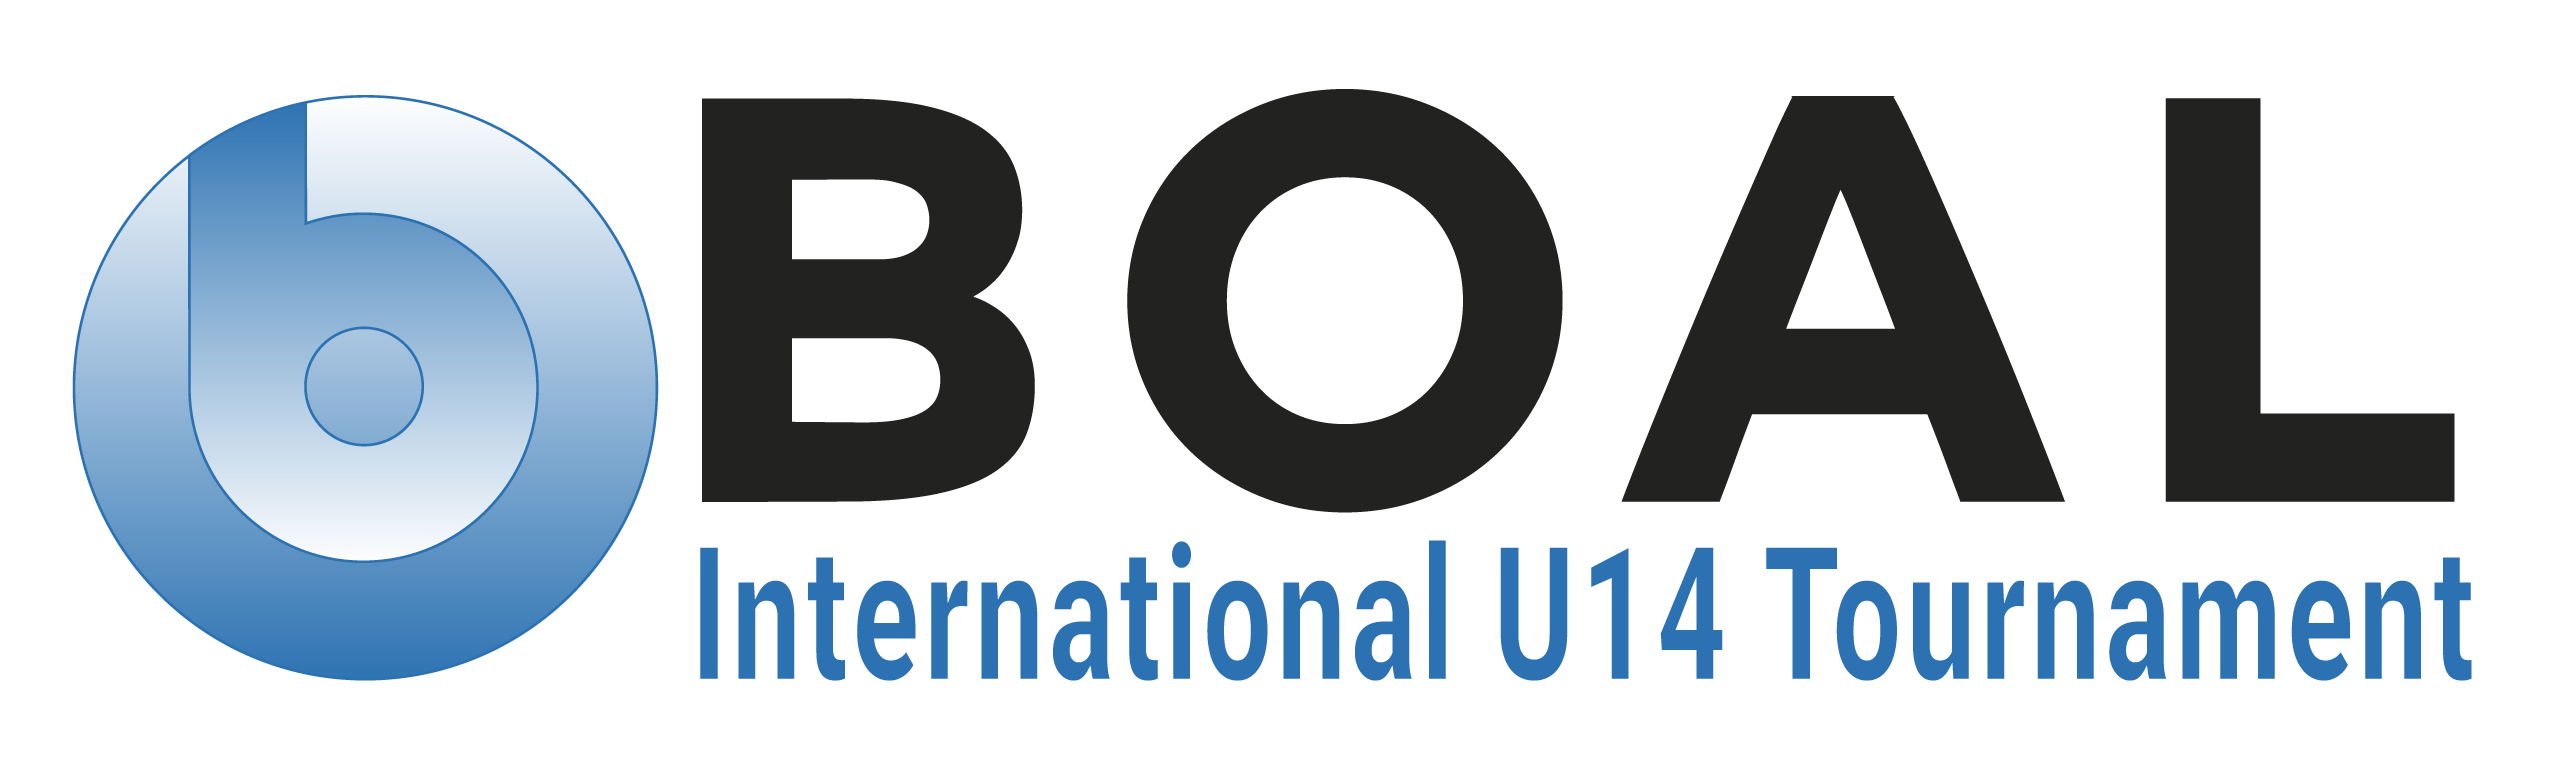 BOAL International U14 Tournament